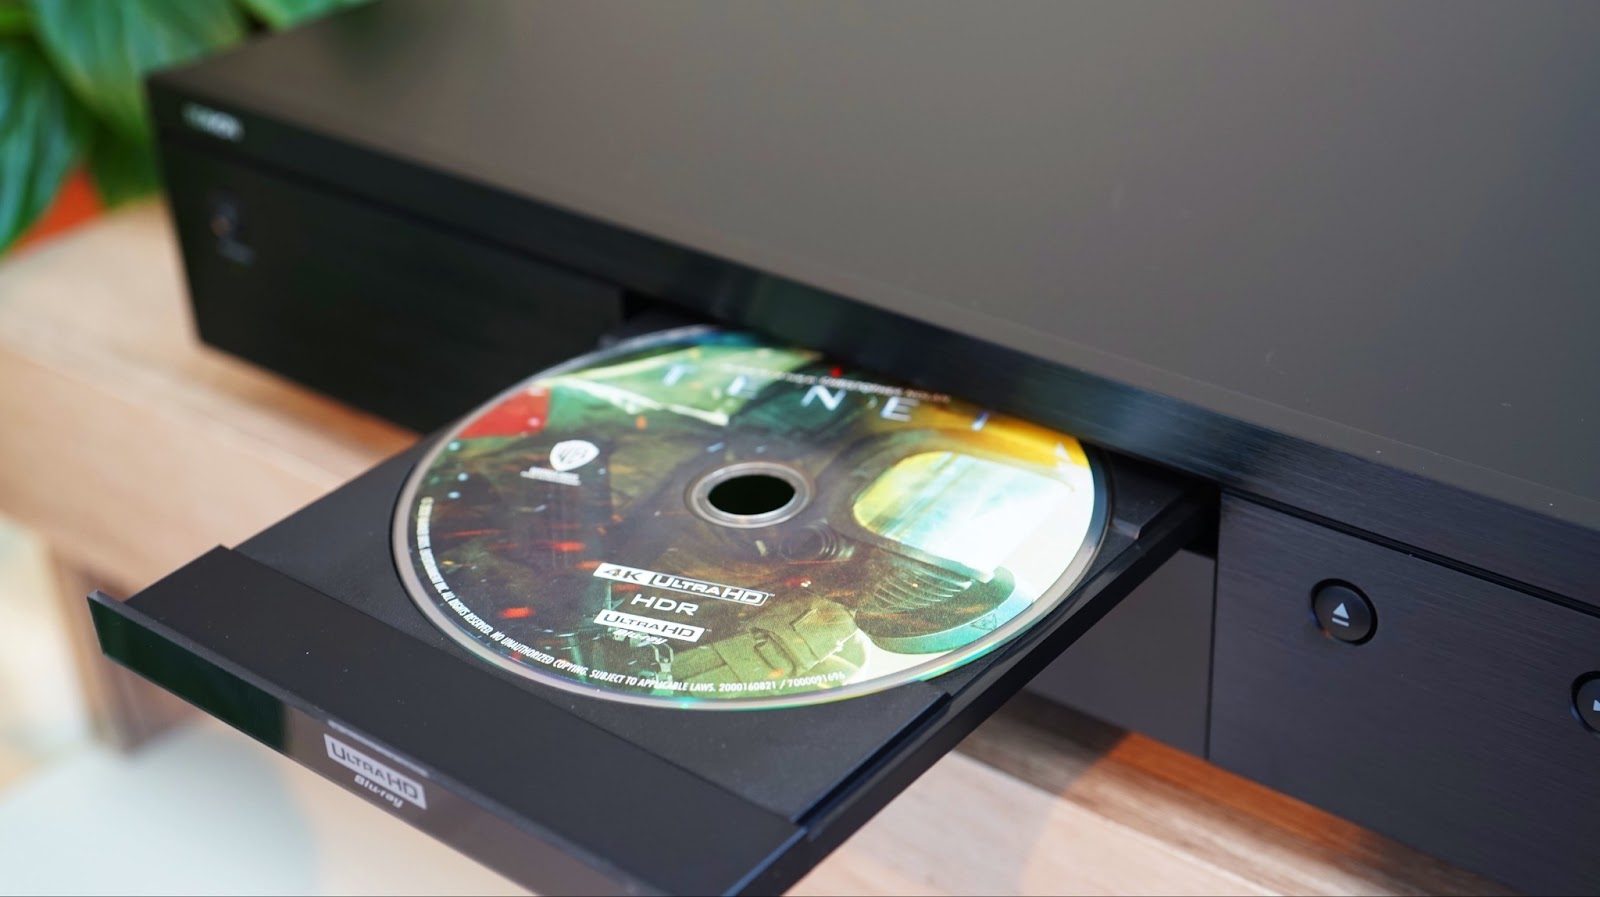 Reavon UBR-X100 4K Blu-ray player review